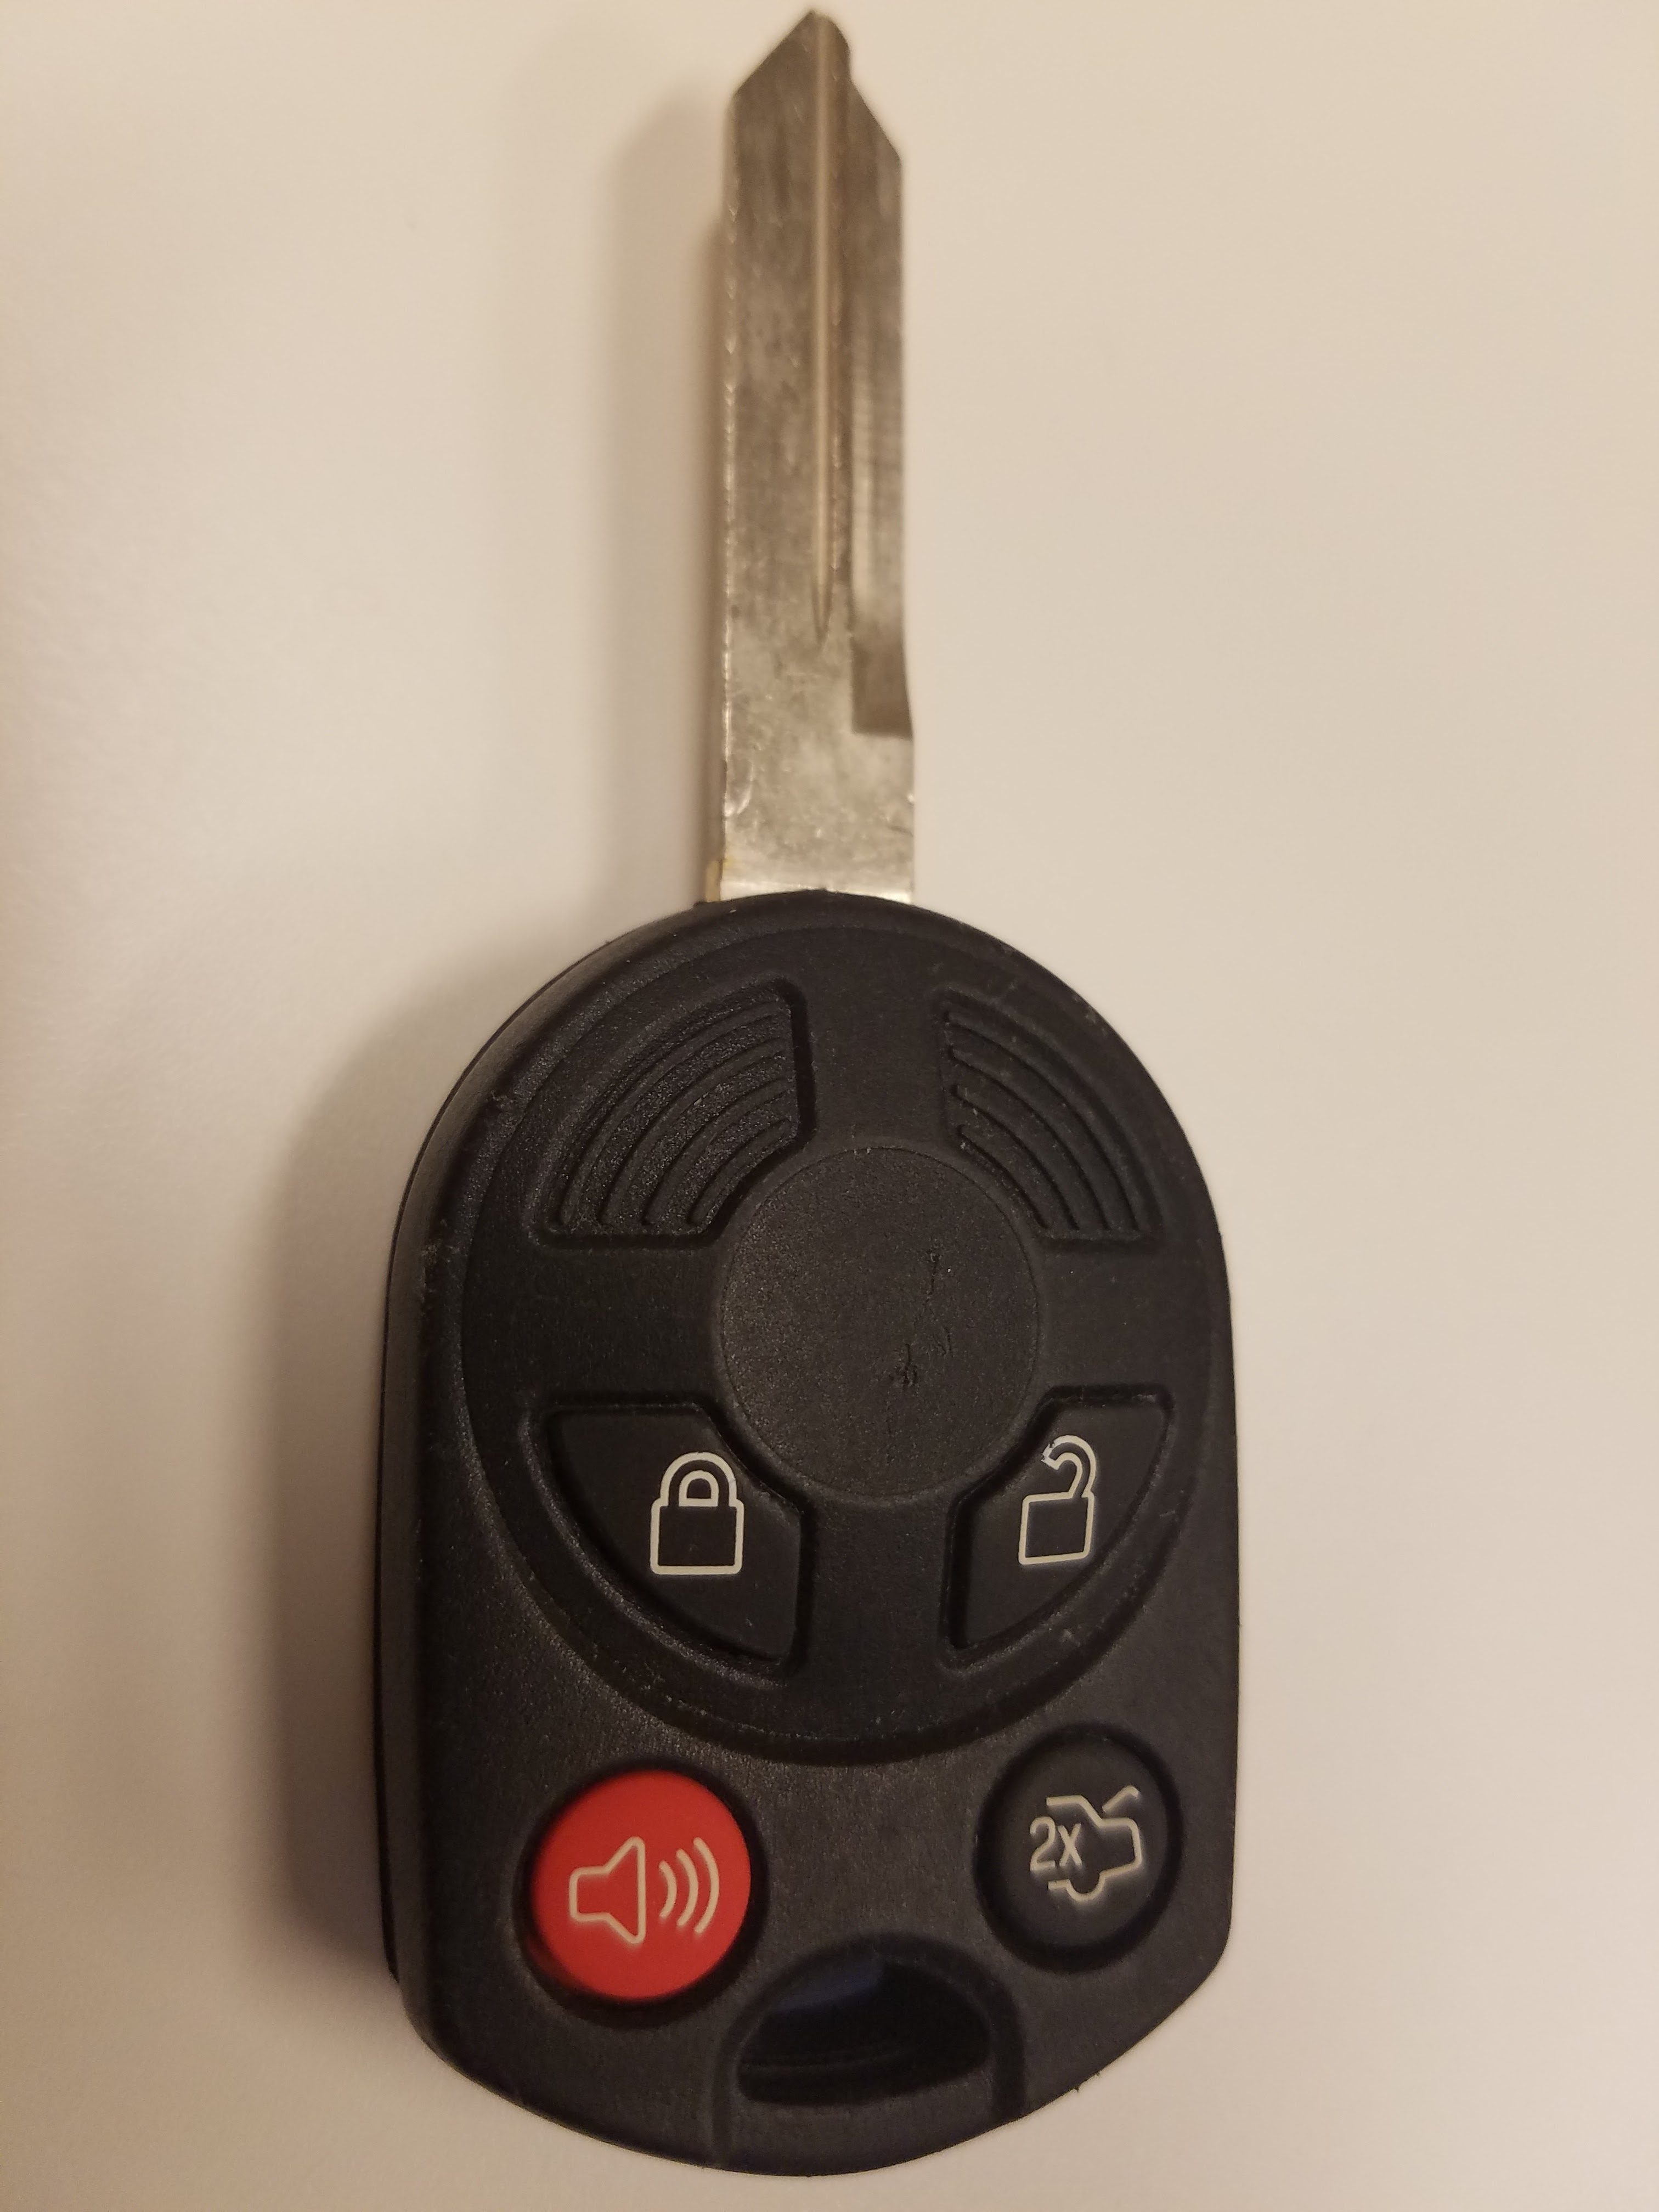 NEW Keyless Entry Key Fob Remote For a 2001 Ford Explorer 3 Button DIY Program